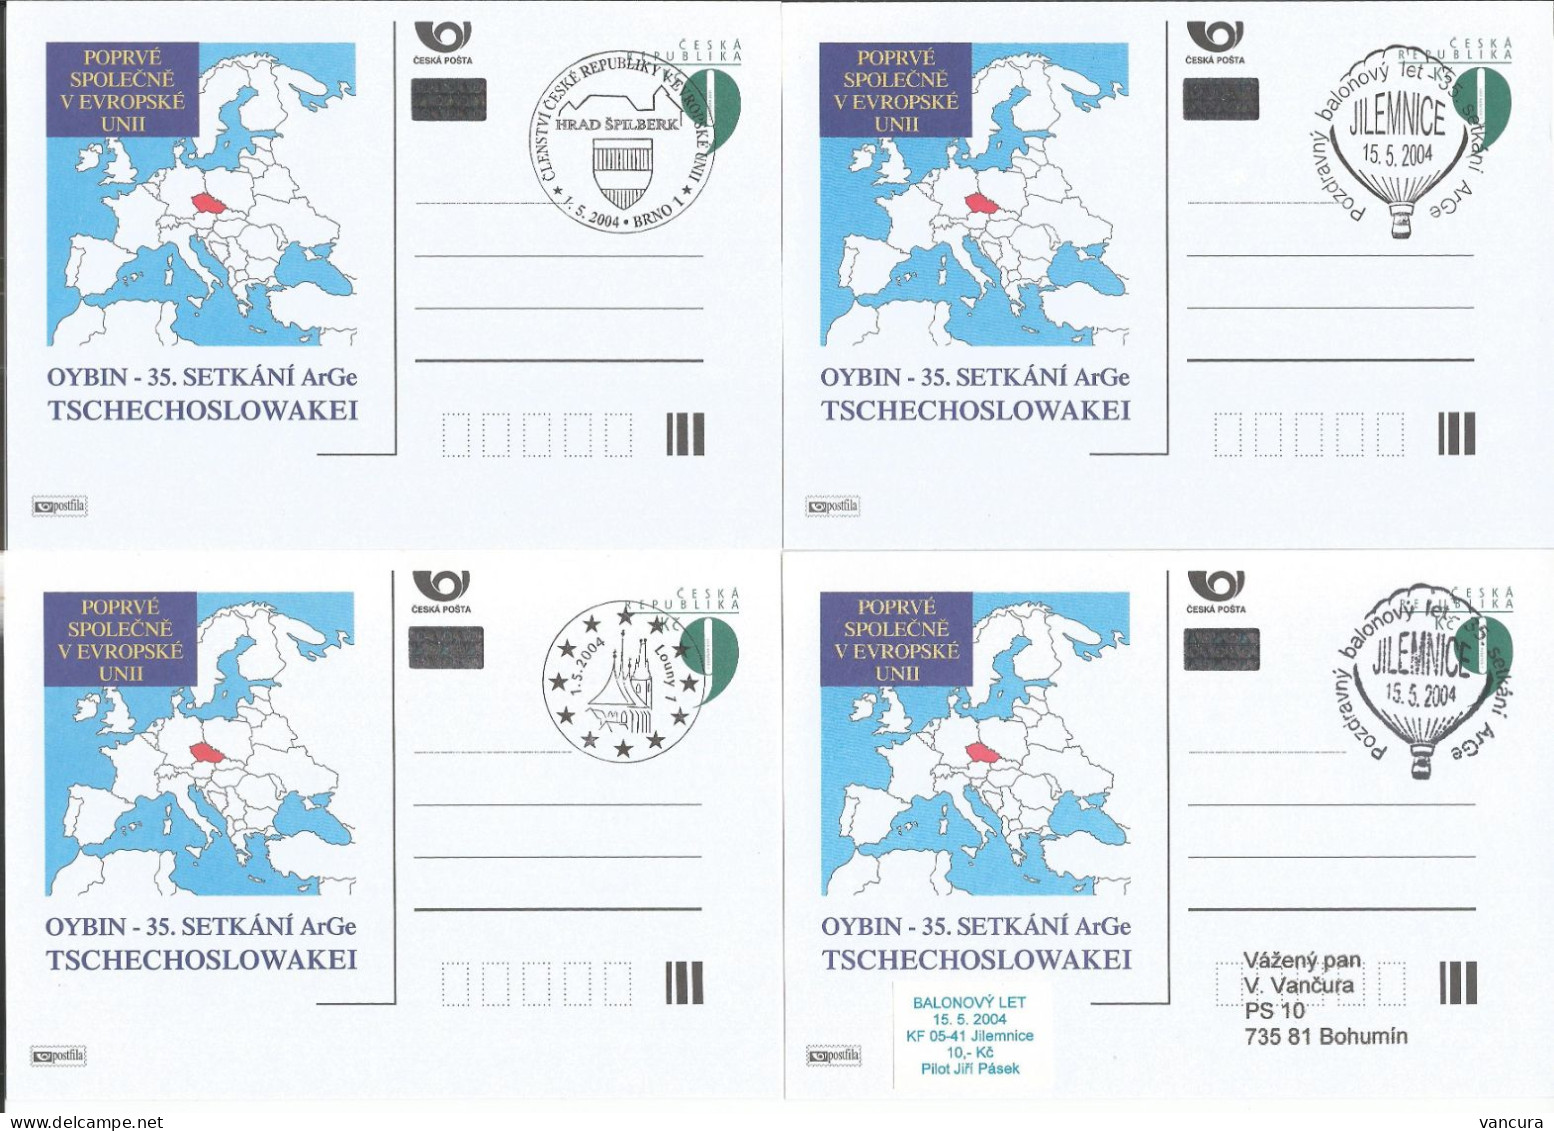 CDV A 101 Czech Republic ArGe Meeting CR In EU 2004 - Postcards